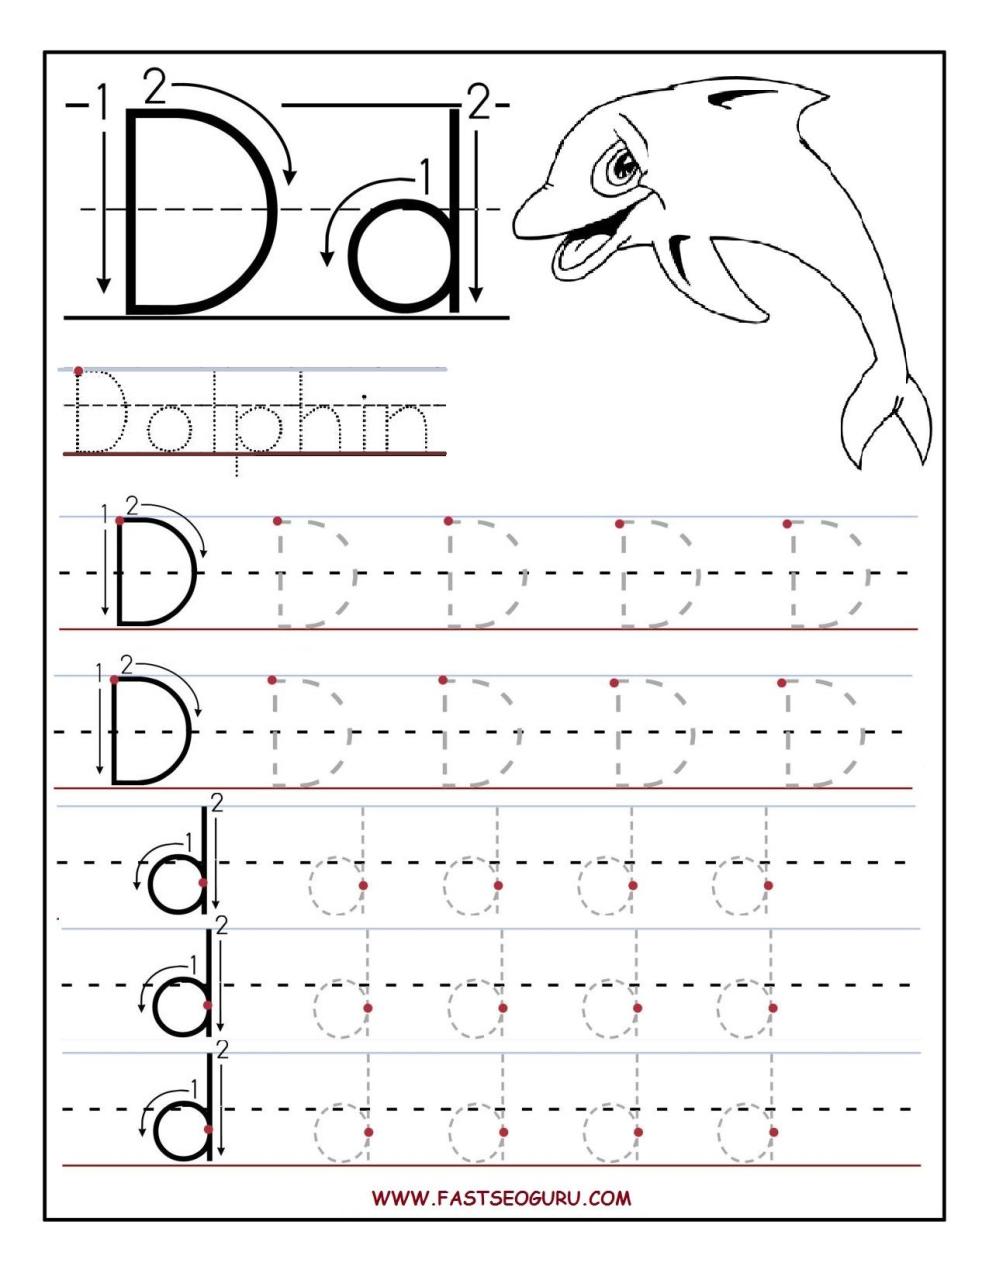 Tracing Letter D Worksheets For Preschool